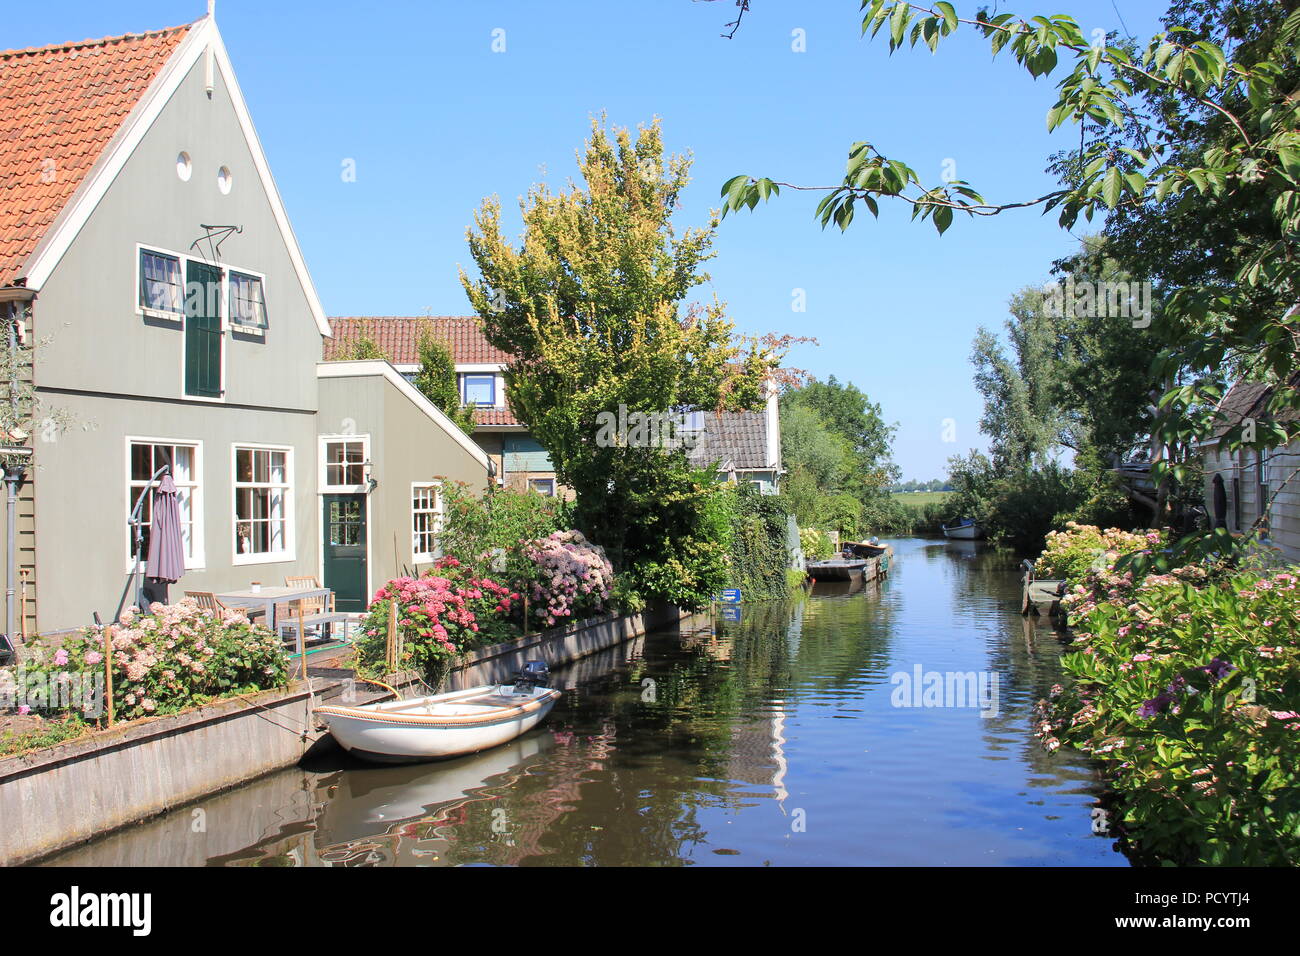 Broek in Waterland. The Netherlands Stock Photo - Alamy